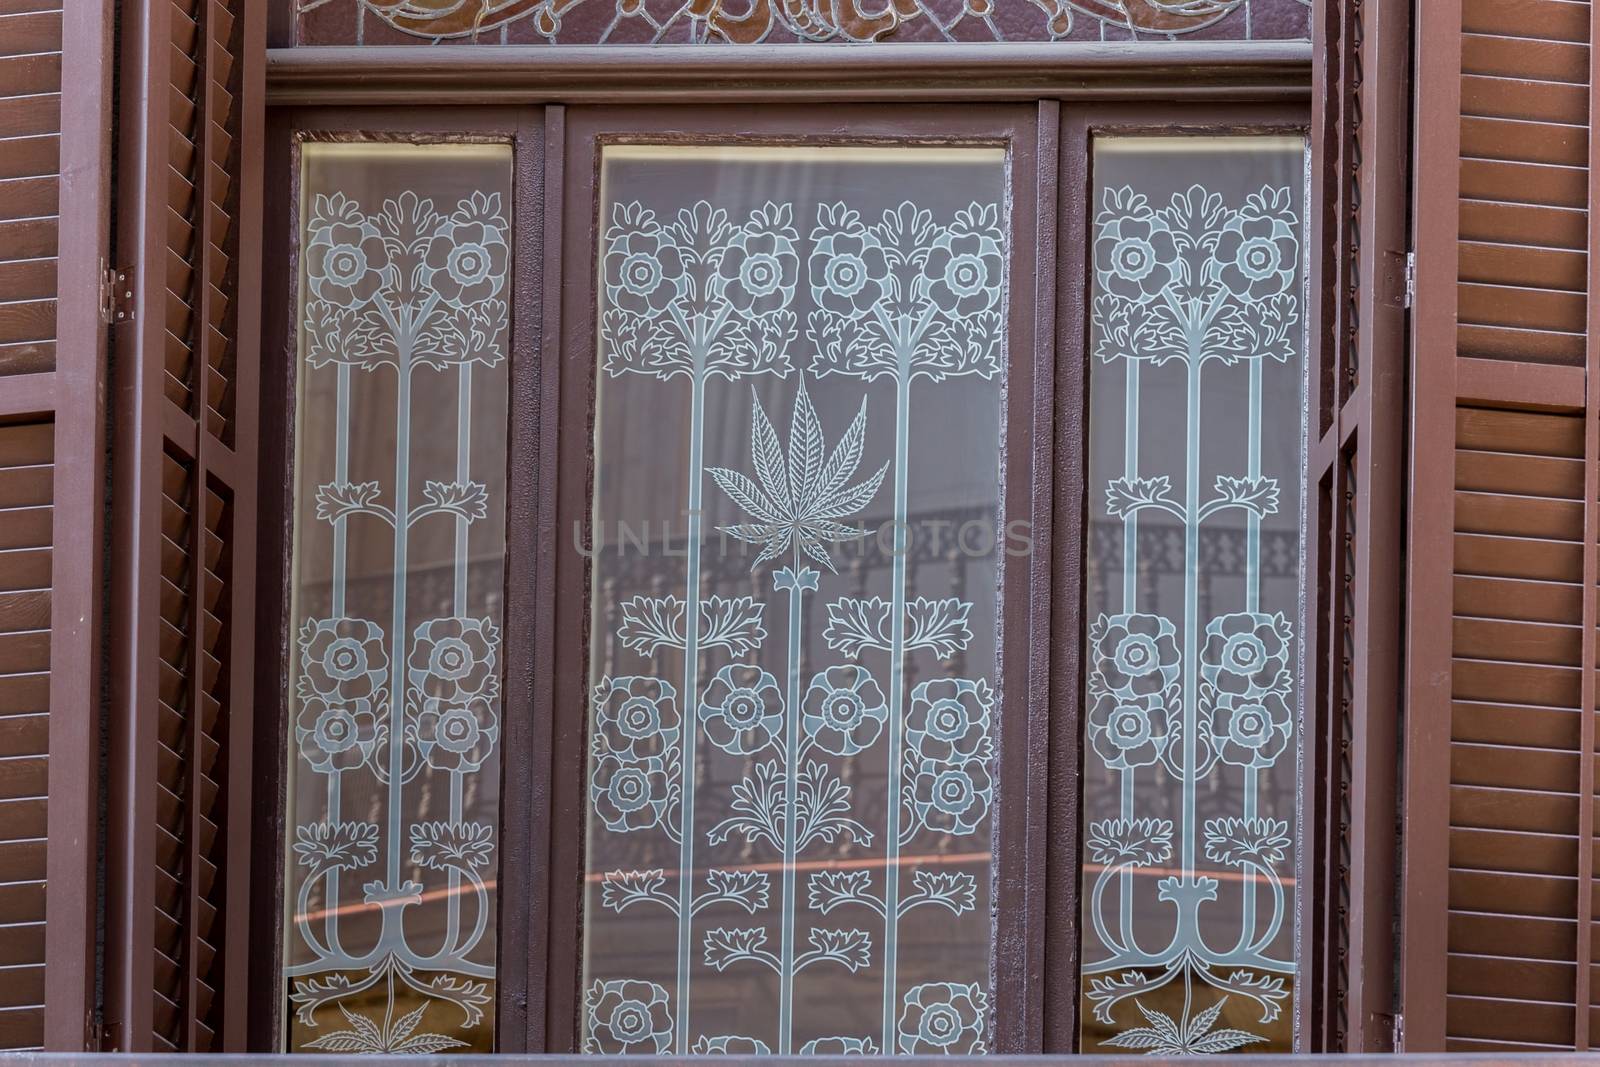 Palau Mornau, Hash Marihuana and Hemp Museum, Barcelona, Ciutat Vella, Spain